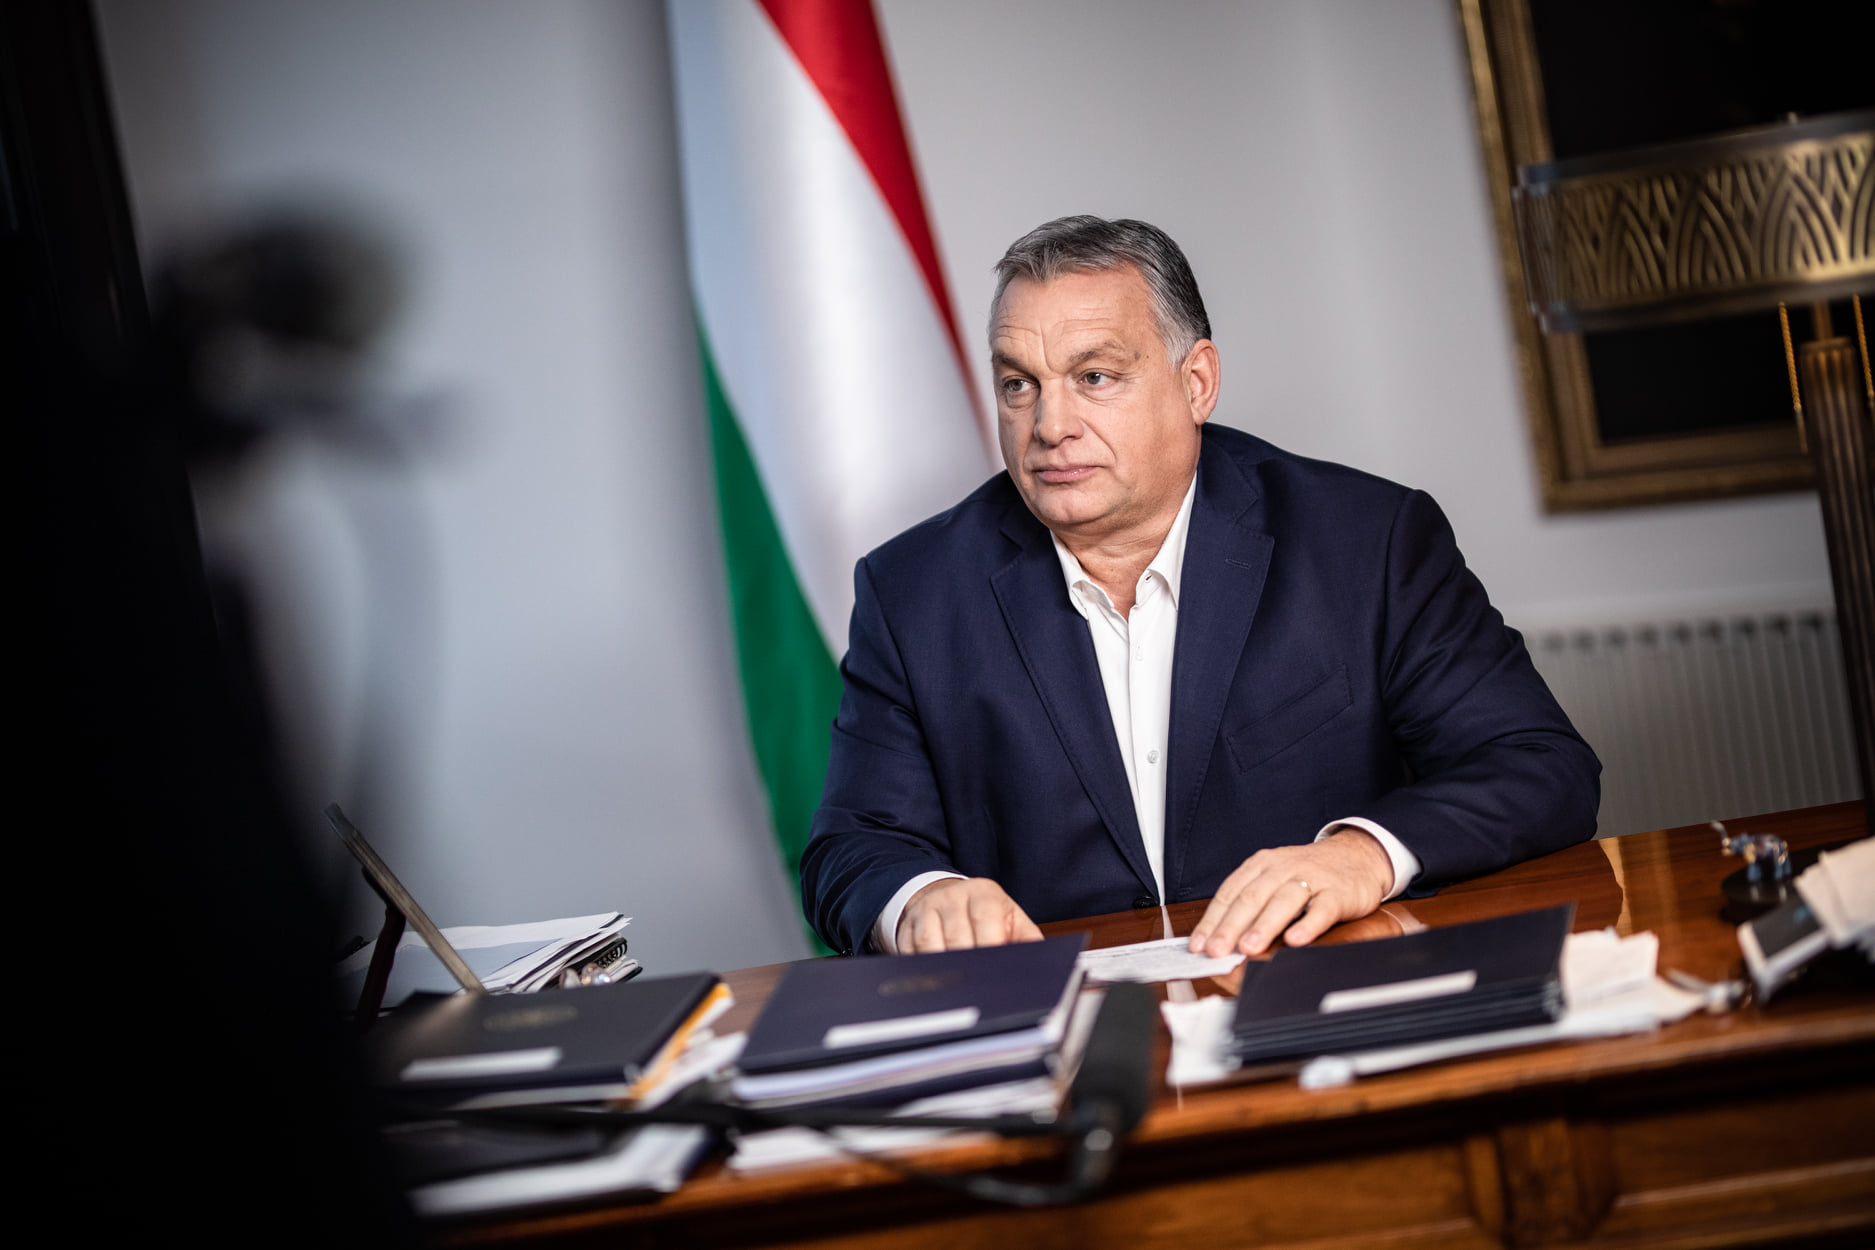 Orbán-Zelenskyy Talks: Hungary Supports Ukraine's EU Aspirations